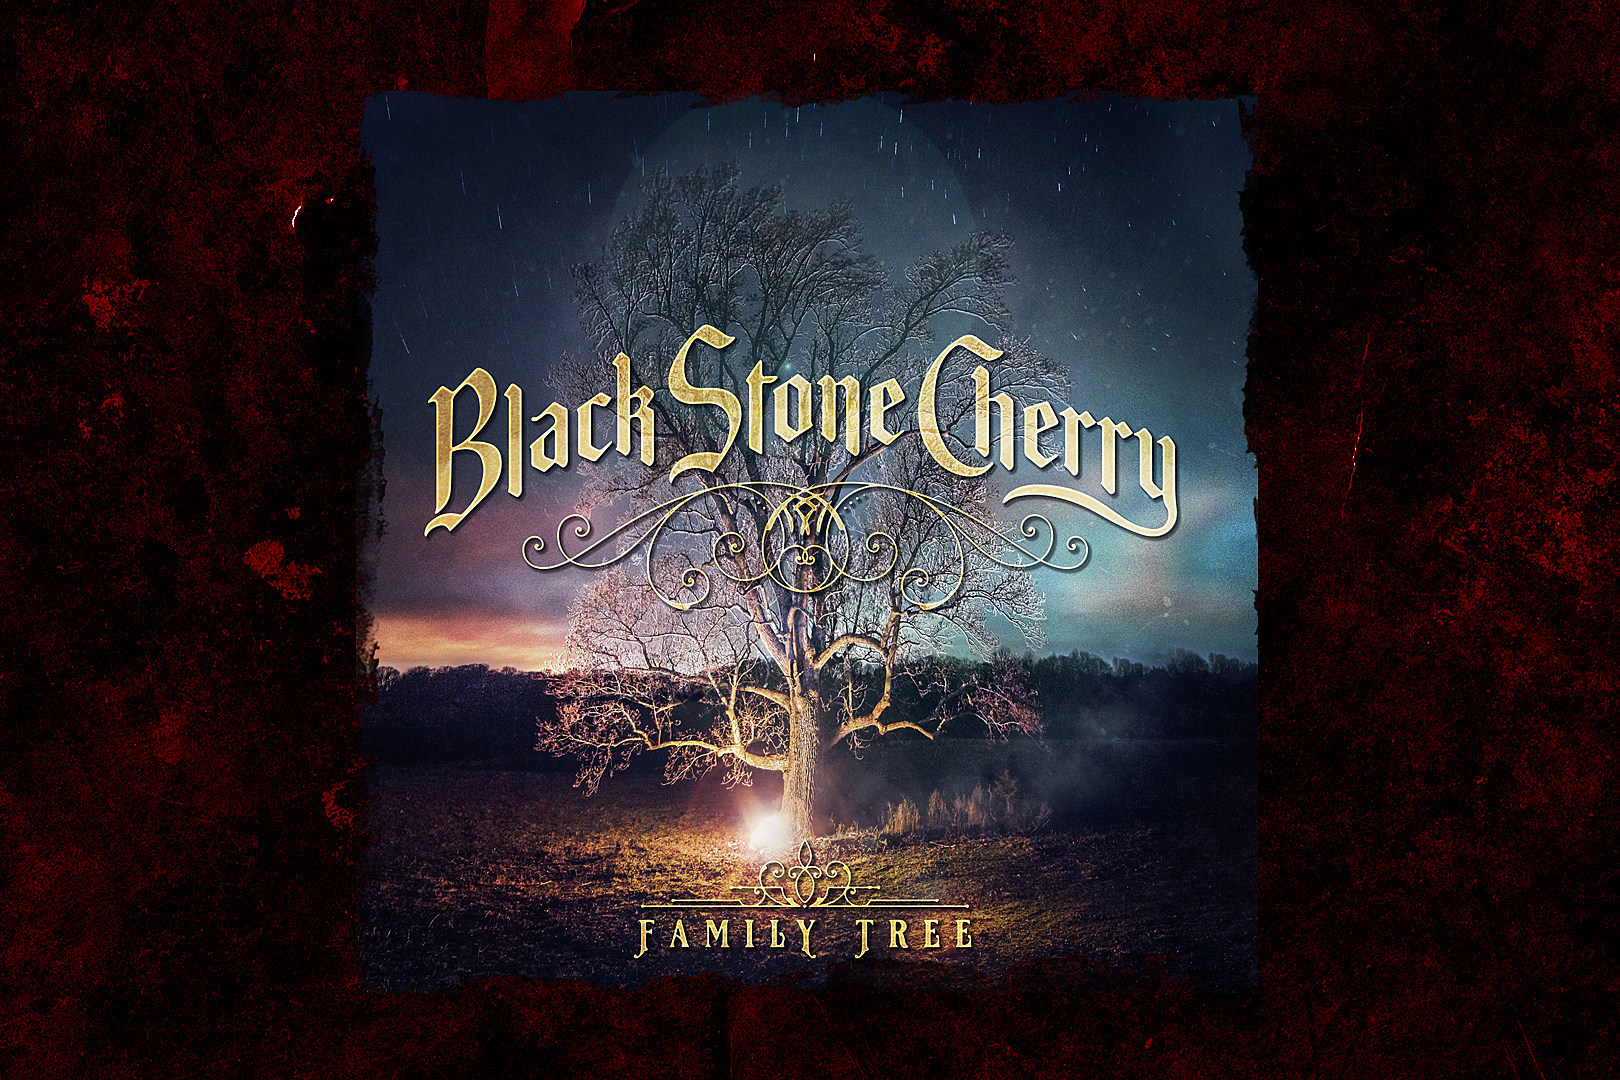 Black Stone Cherry, 'Family Tree' - Album Review